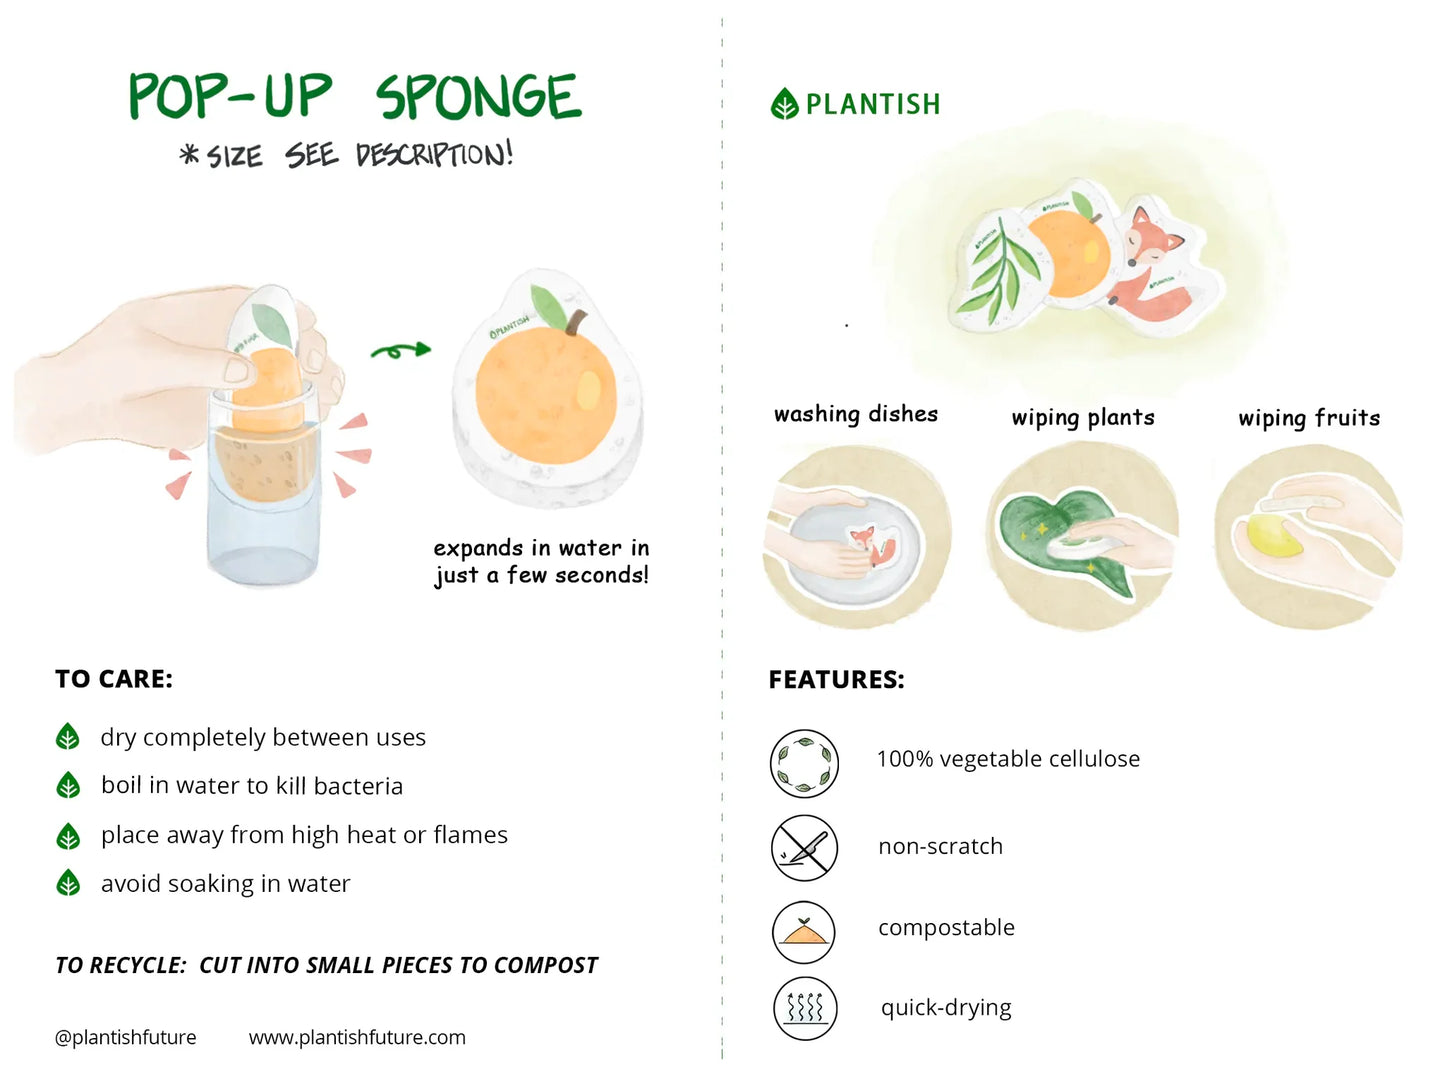 Eggplant Plastic-free Pop-up Sponge